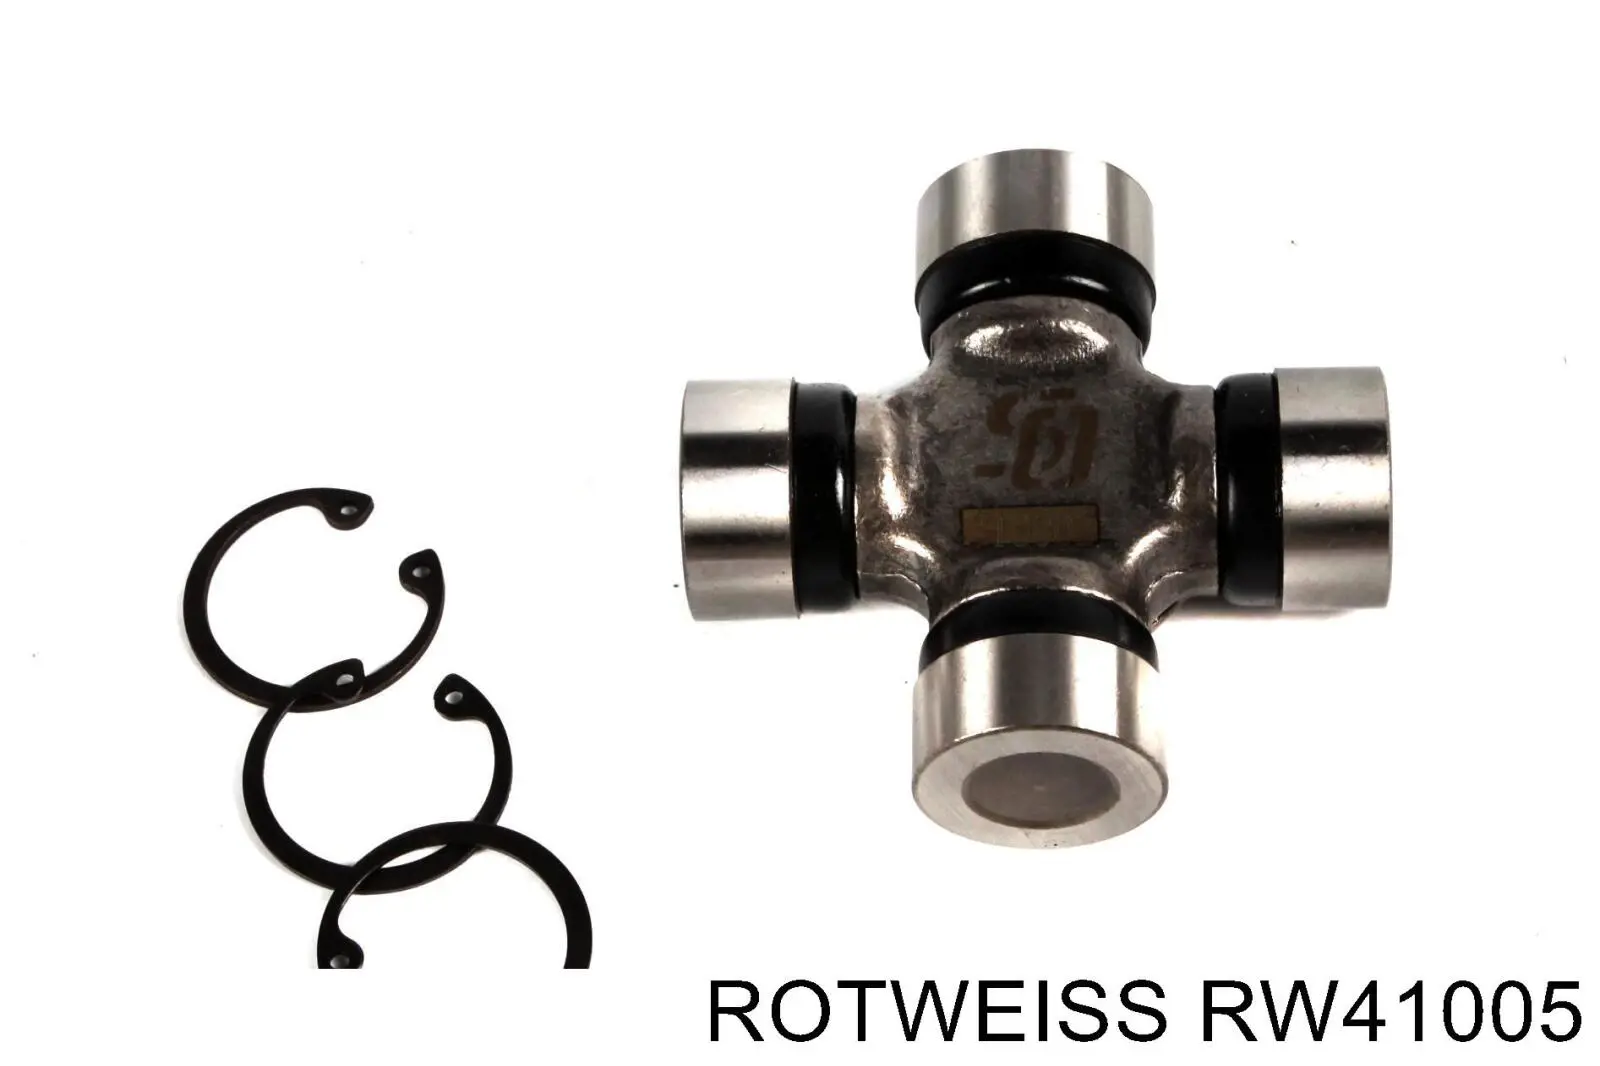 RW41005 Rotweiss cruzeta da junta universal traseira